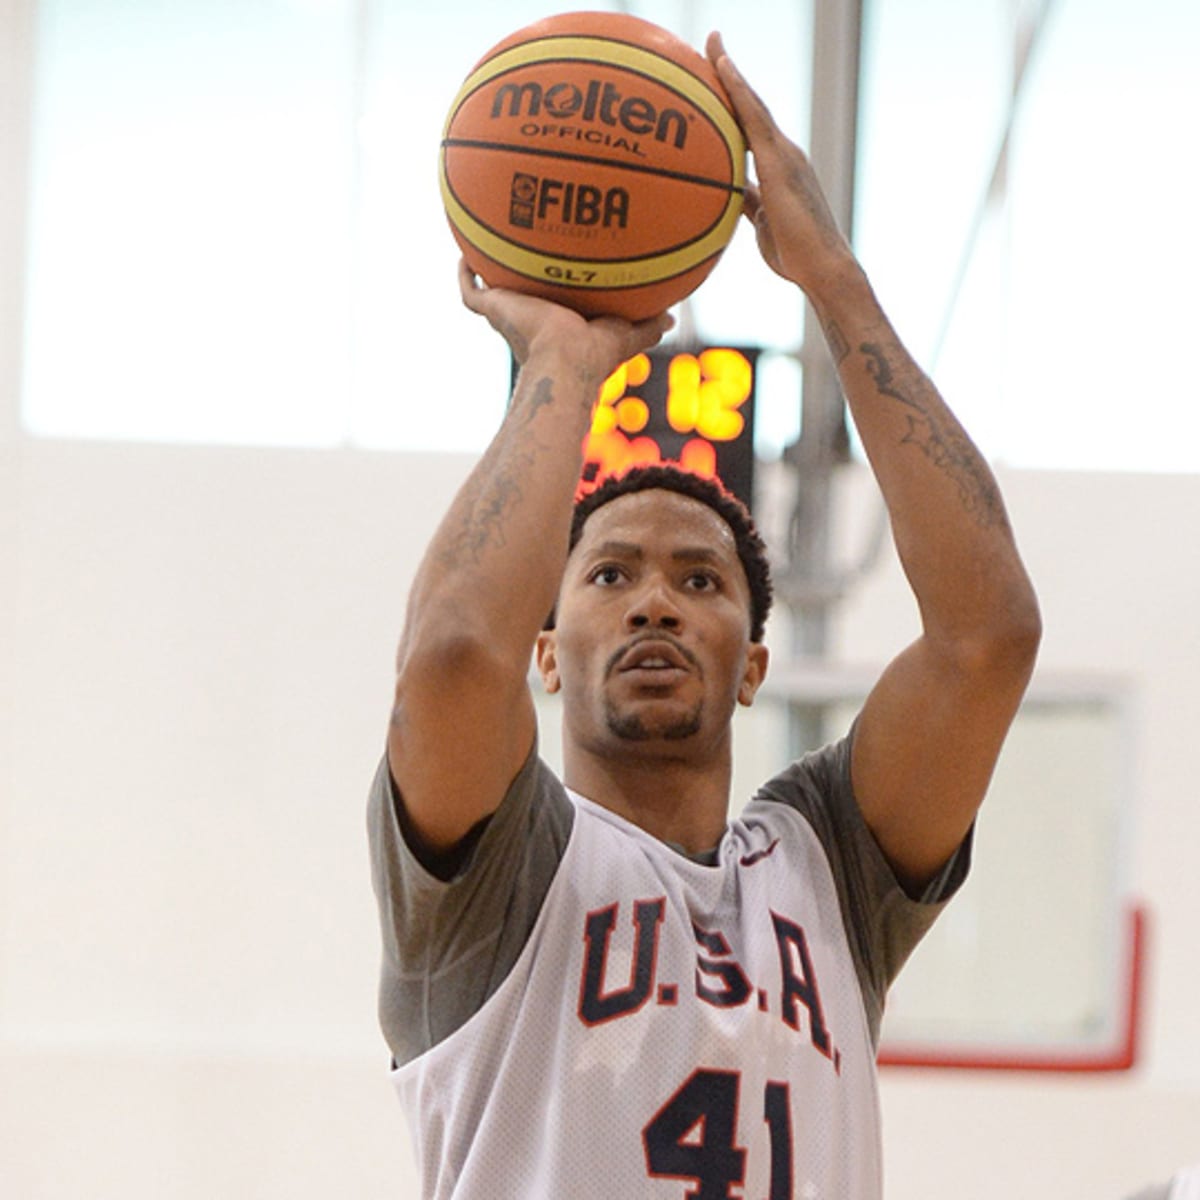 Knicks' point guard Derrick Rose eager for full healthy NBA season